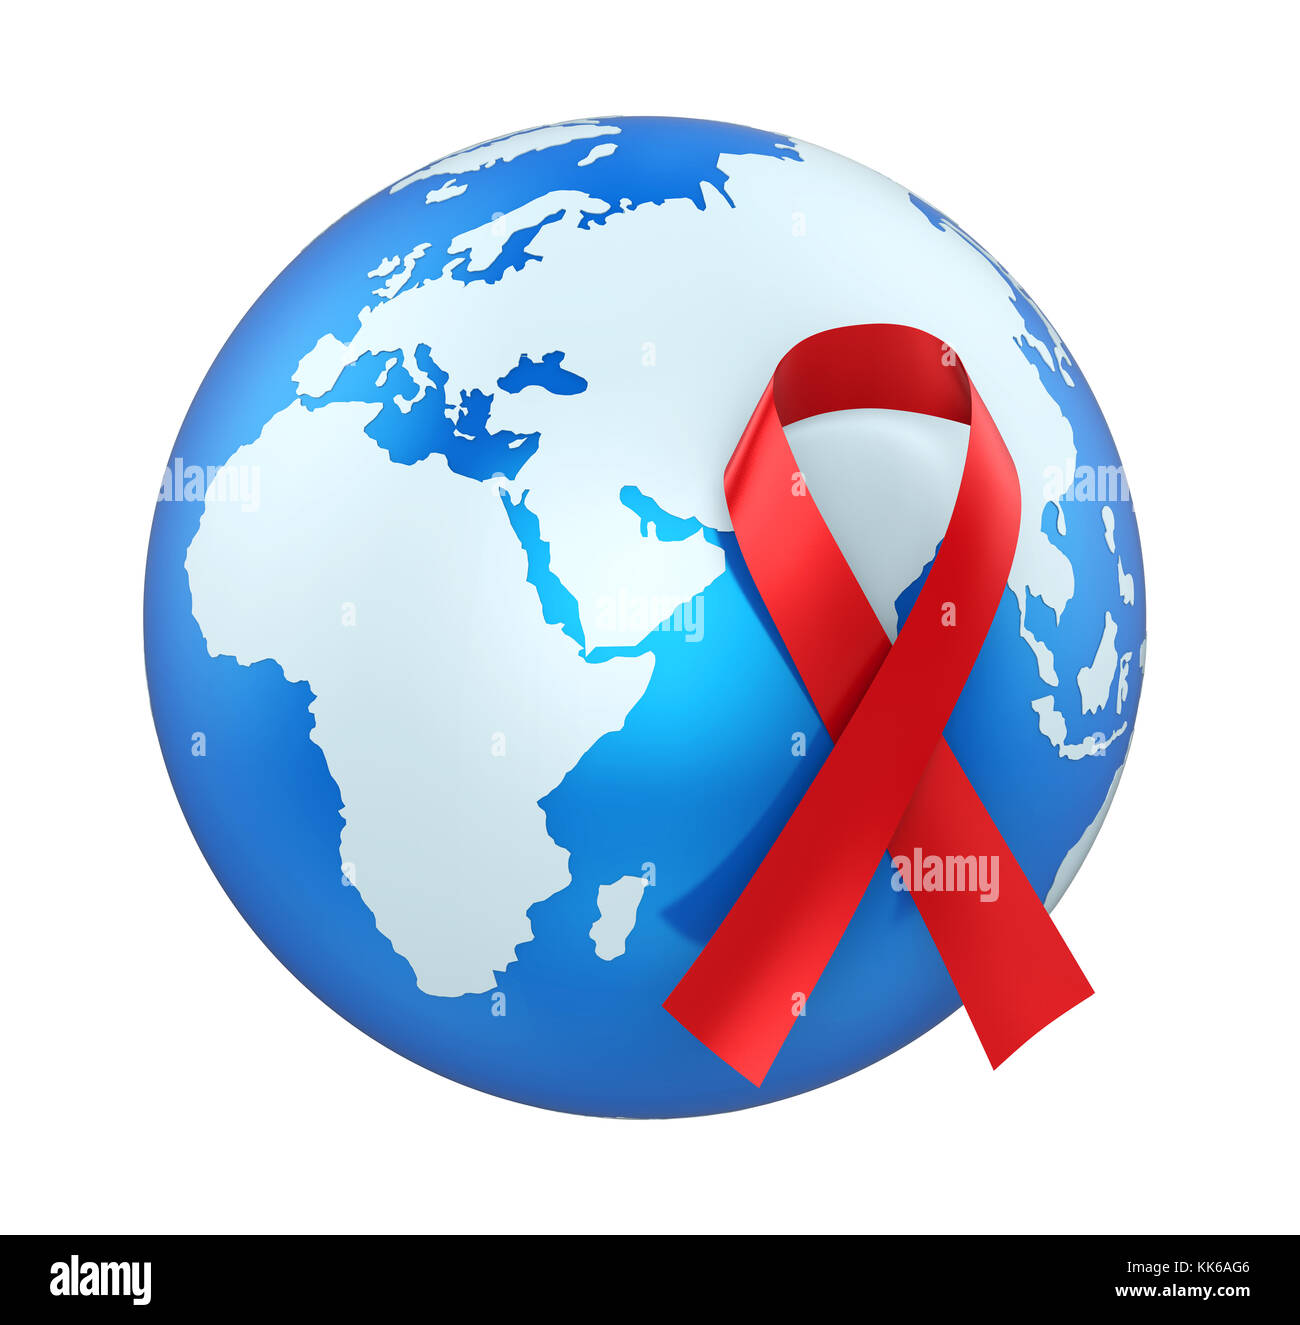 Hiv Virus Red Ribbon Symbol Hiv Stock Photo 1851830944